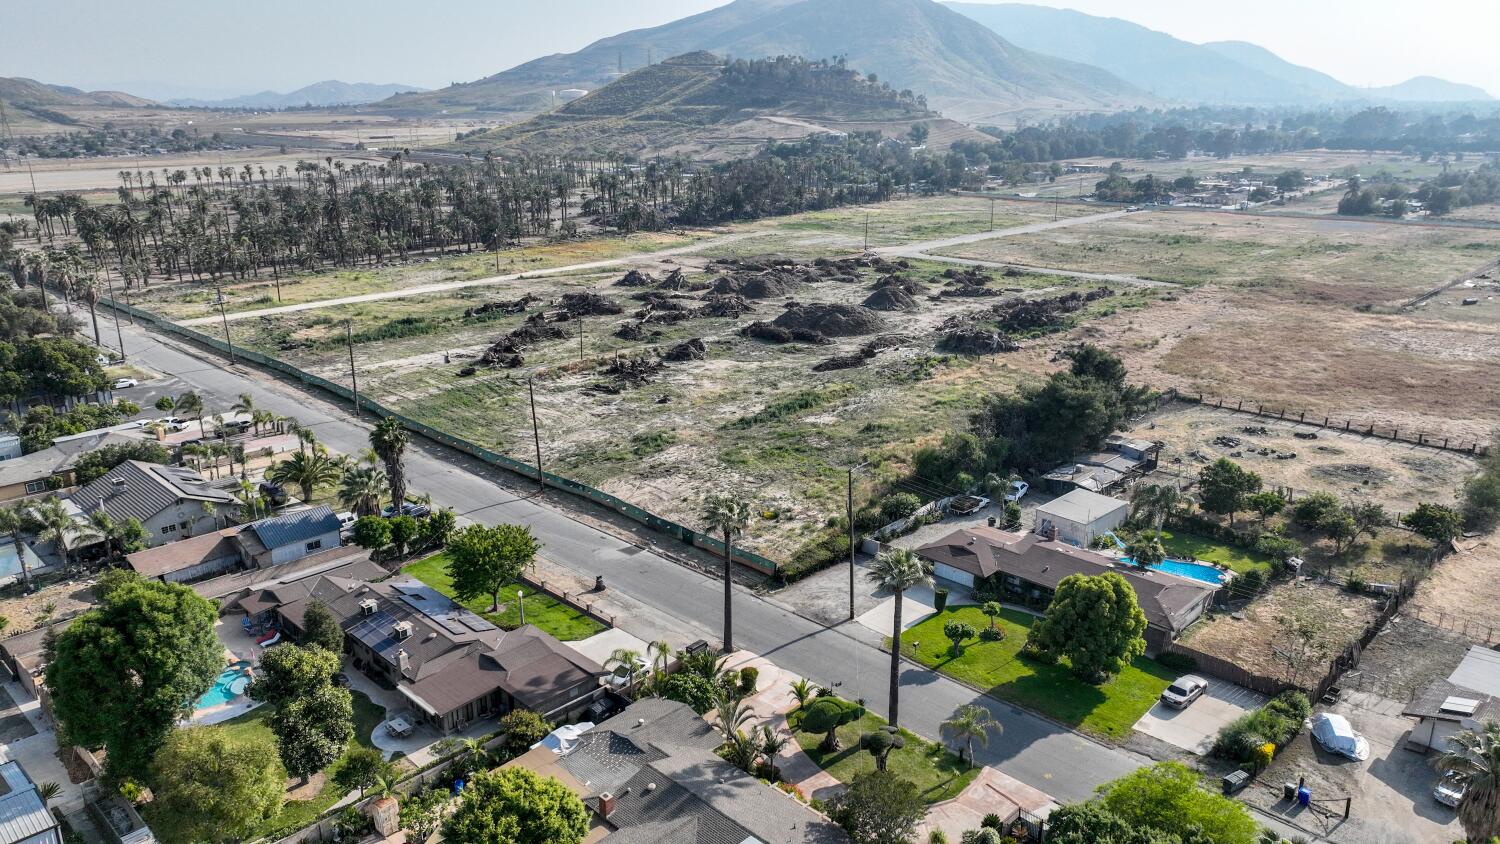 San Bernardino County has targeted majority Latino community for warehouse development, complaint alleges